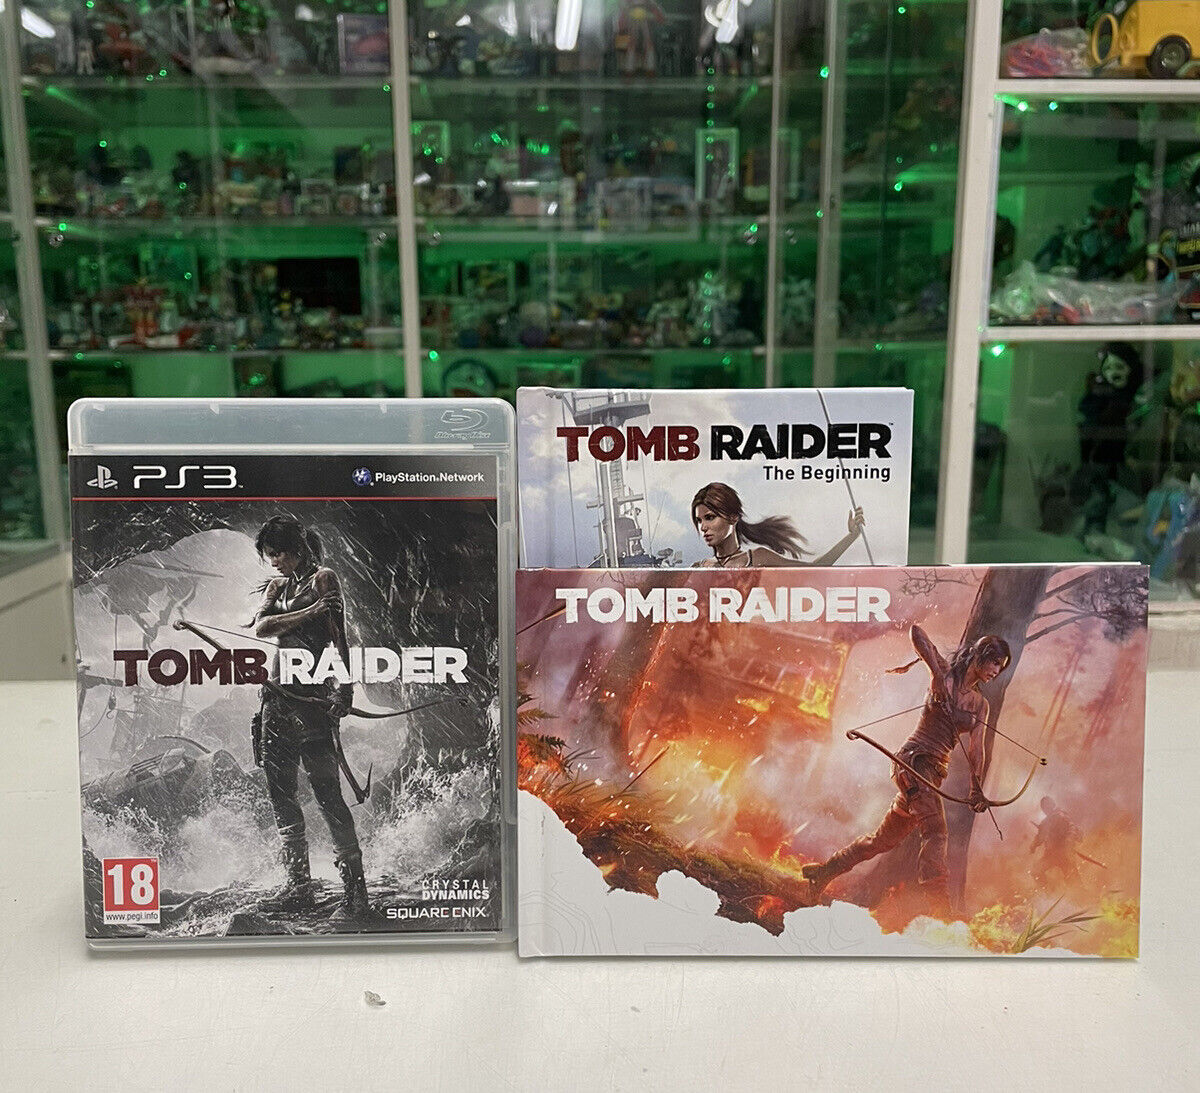 Ps3-Playstation-Tomb-Raider-Pal-ita-Artbook-Comics-The-Beginning-Bundle-134347618701